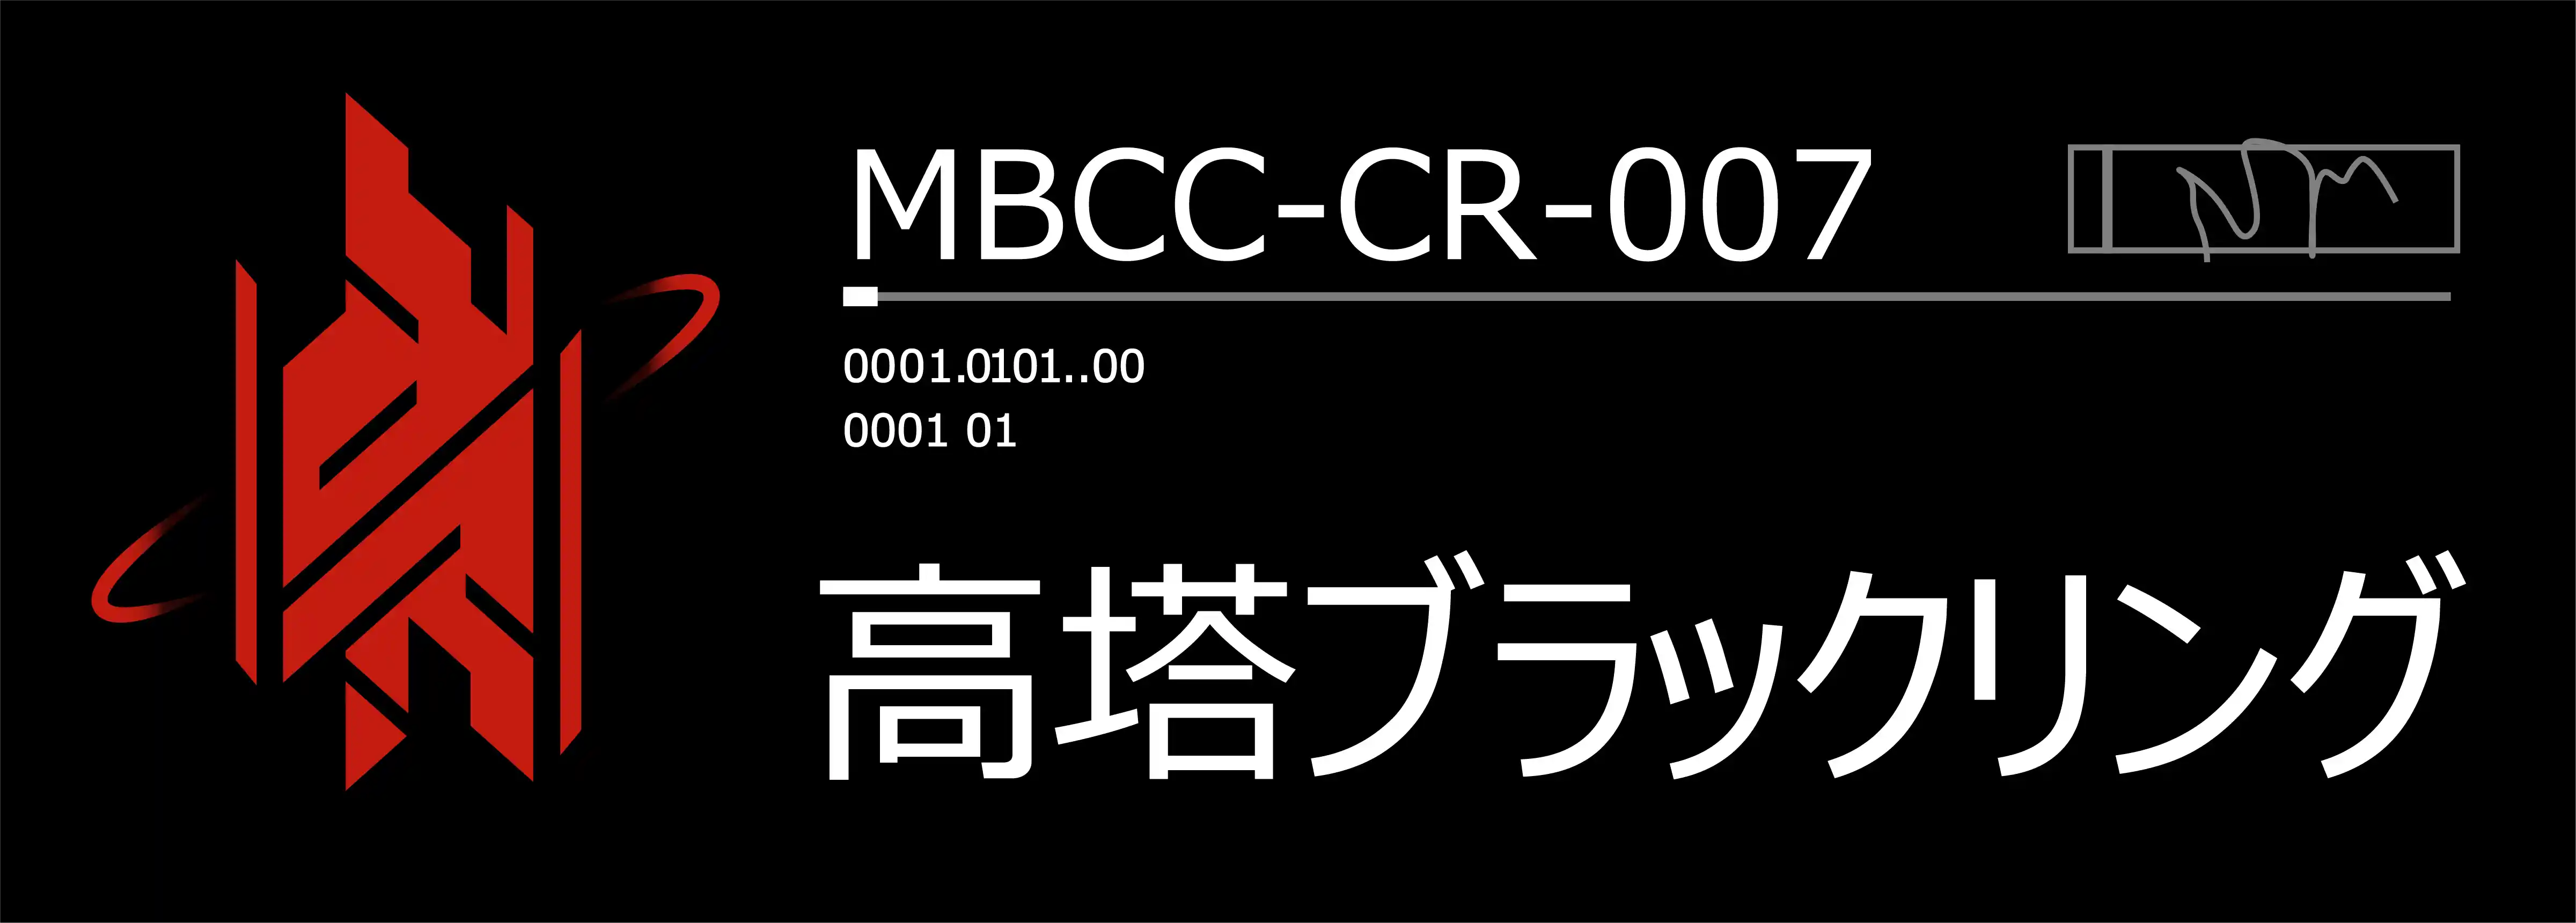 MBCC-CR-007.png